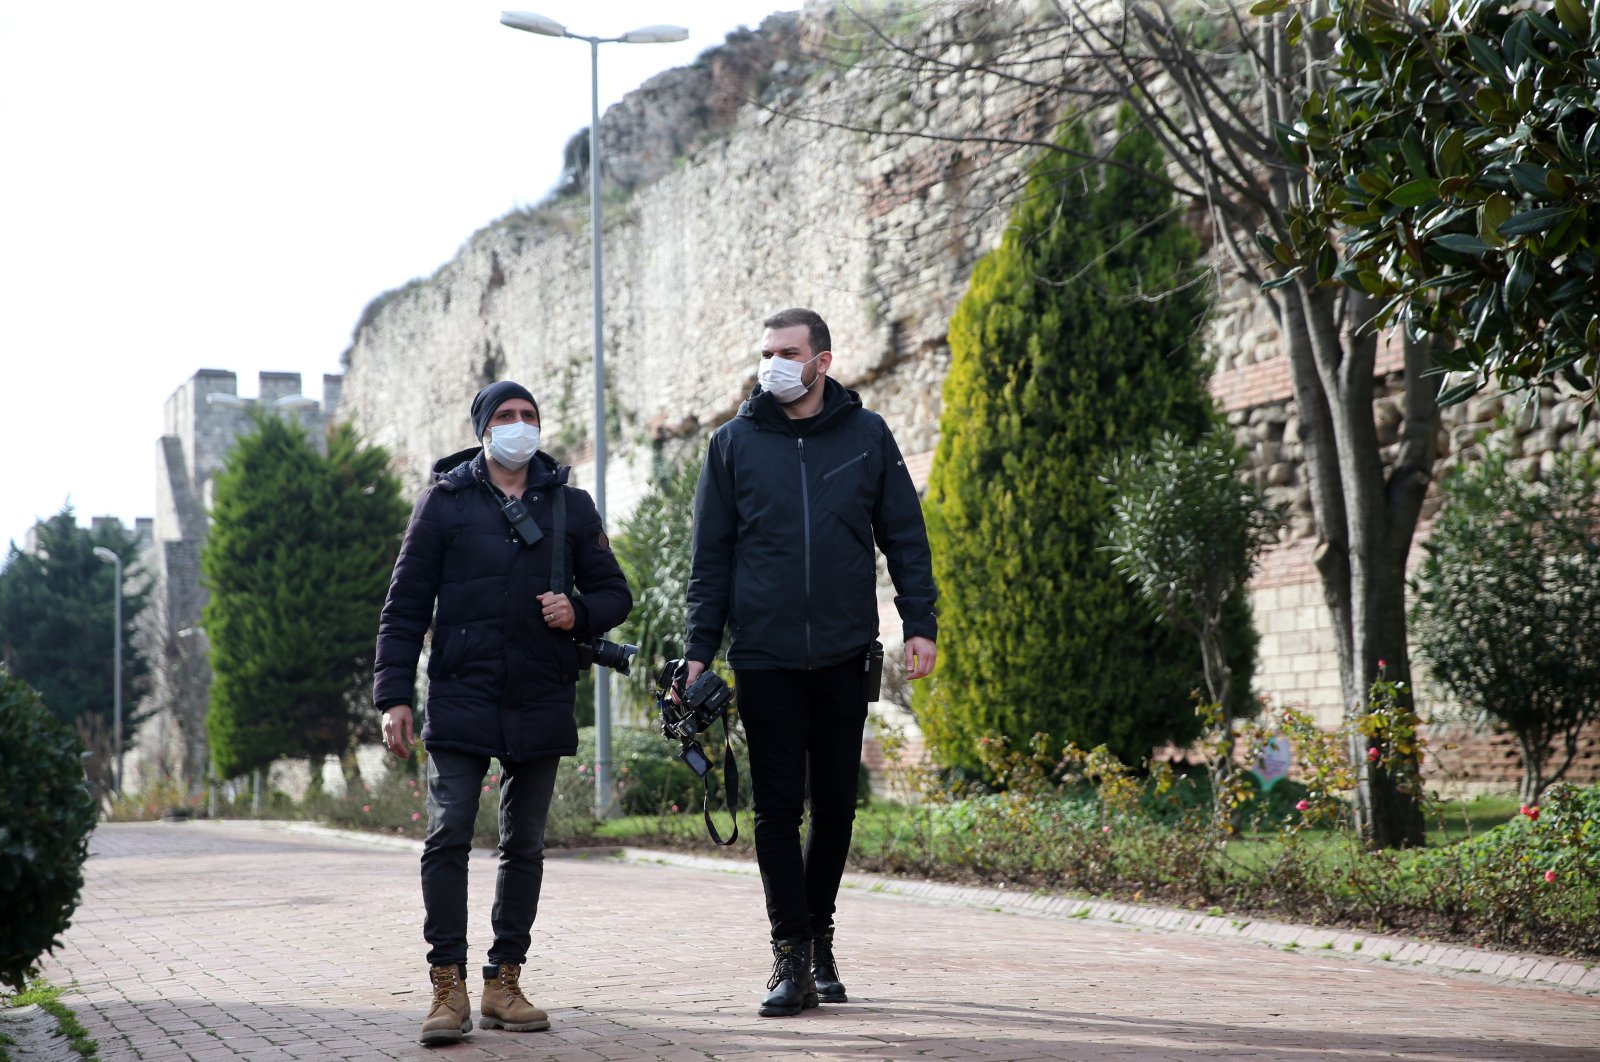 Barış Sözal of Sabah newspaper (L) and Caner Sönmez of IHA, walk near the ancient city walls, in Istanbul, Turkey, Jan. 10, 2021. (AA Photo)